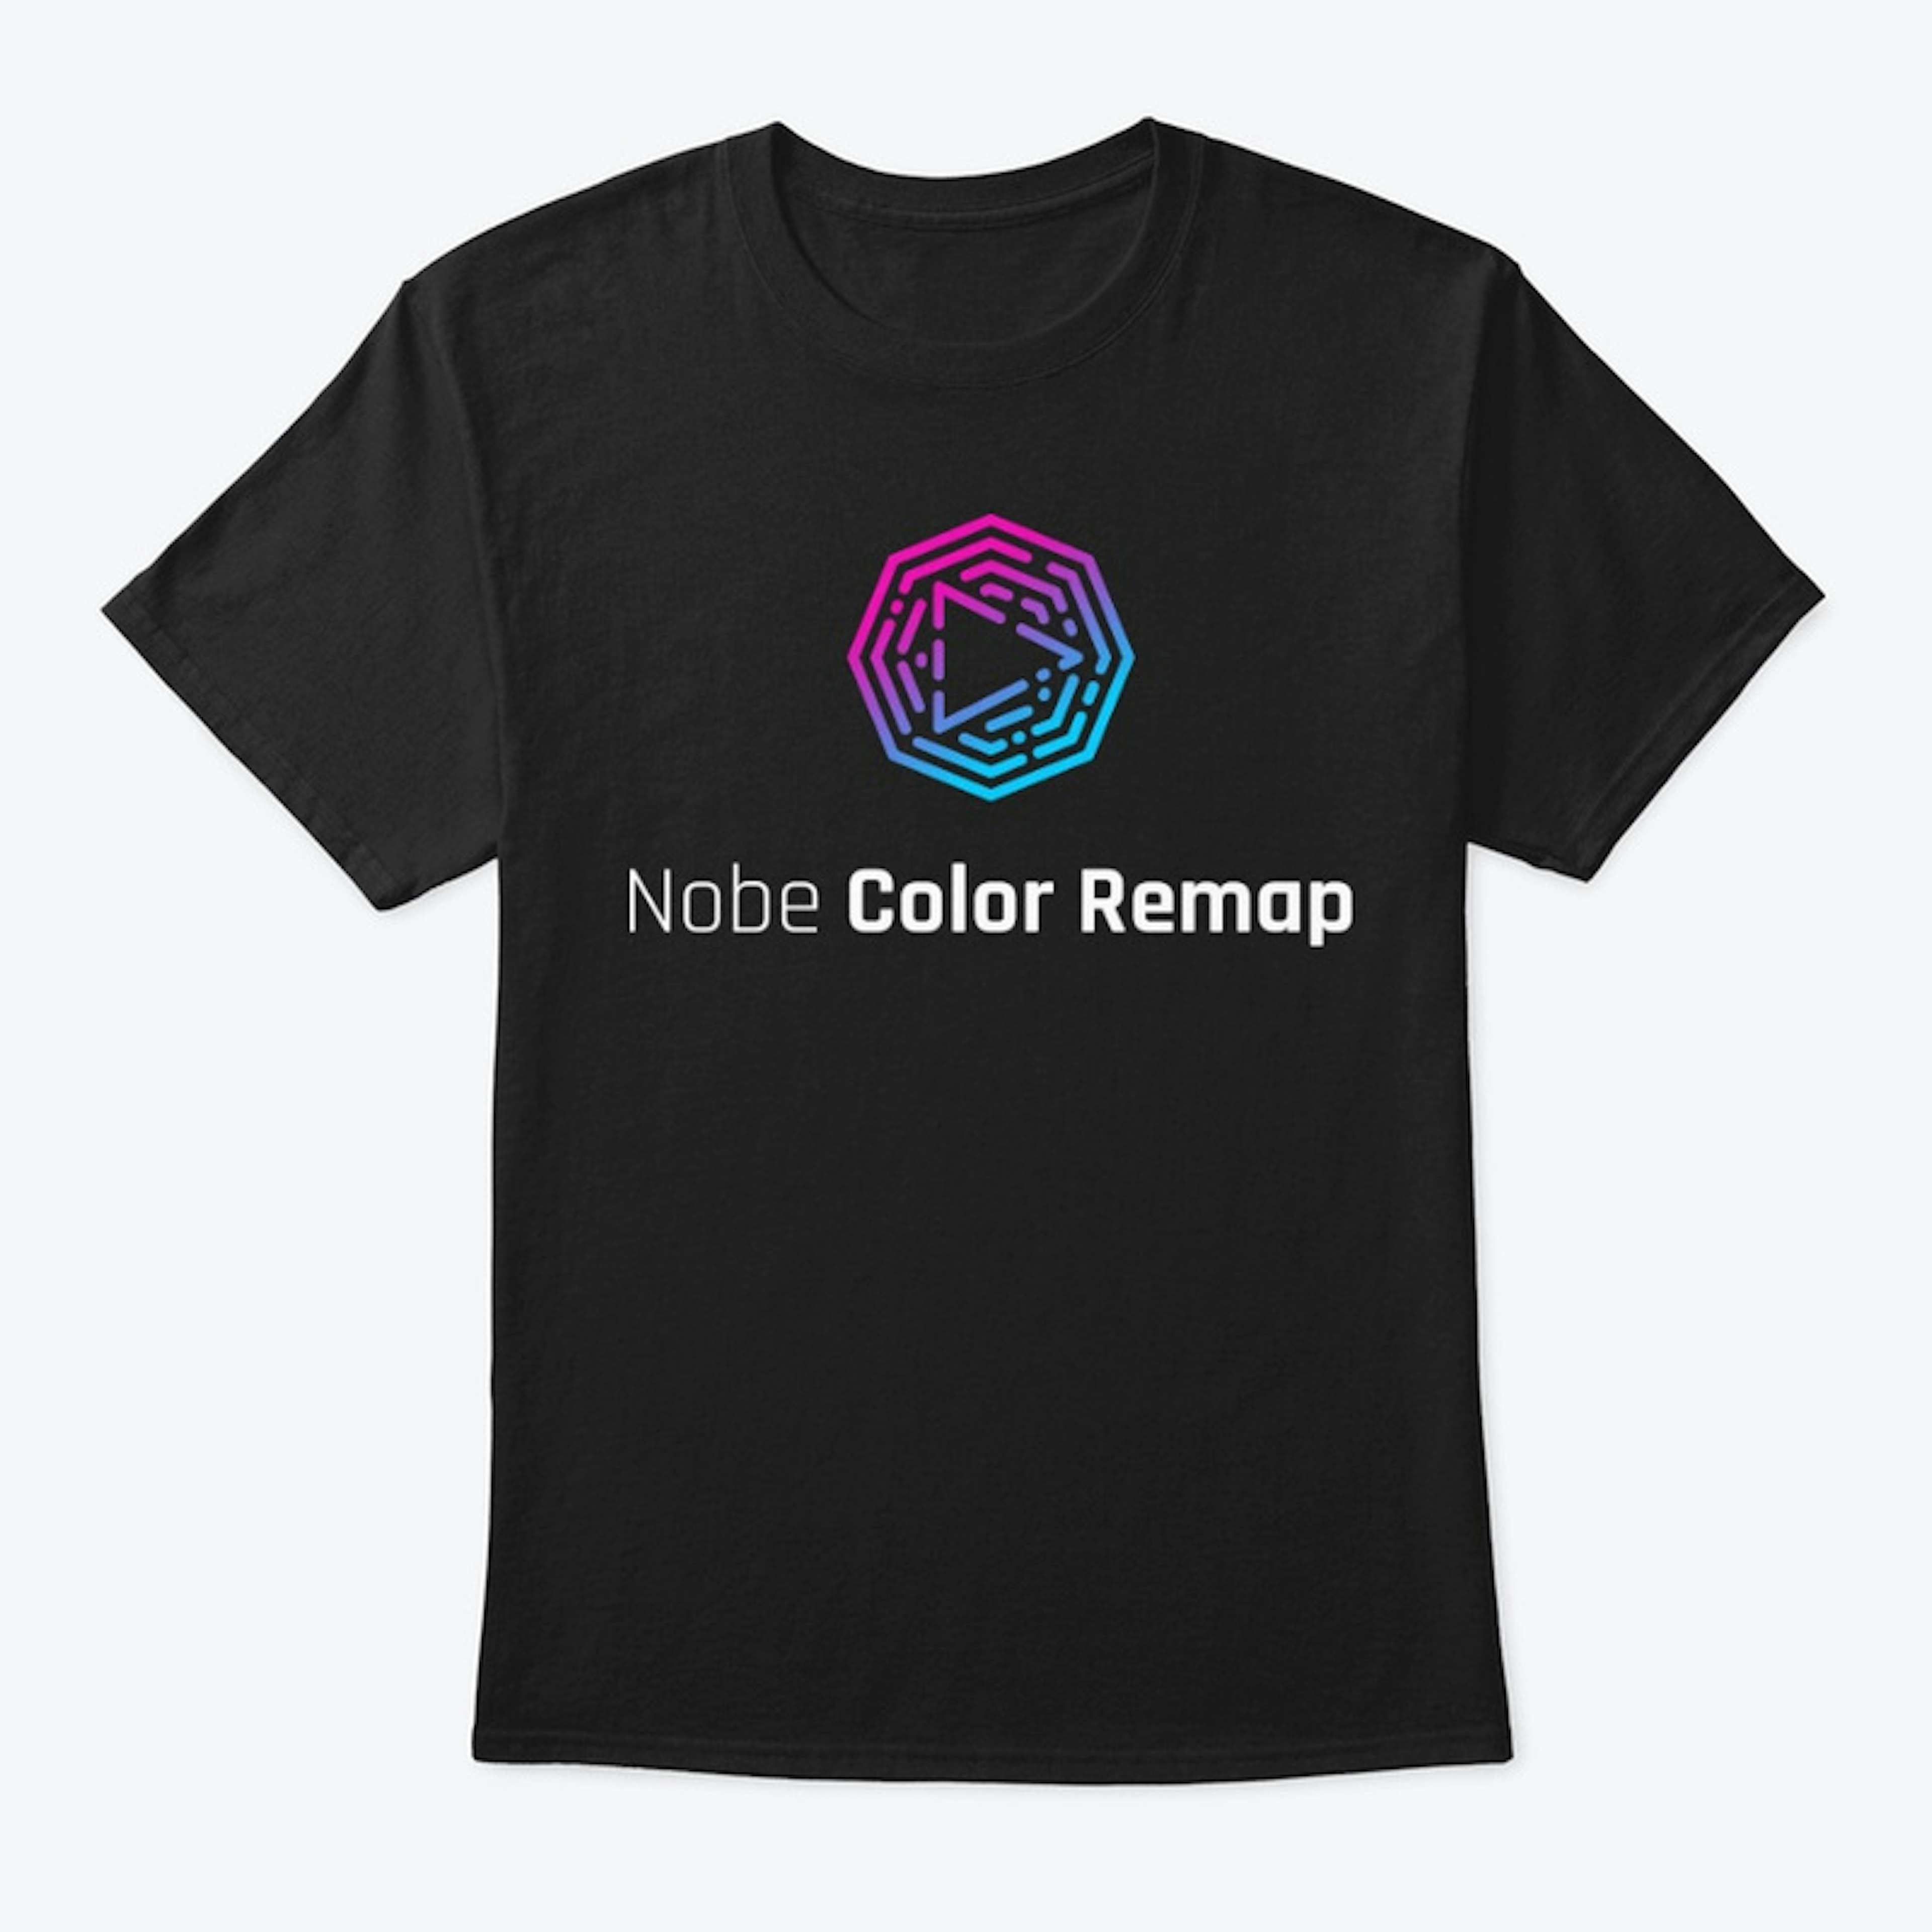 Nobe Color Remap T-Shirt